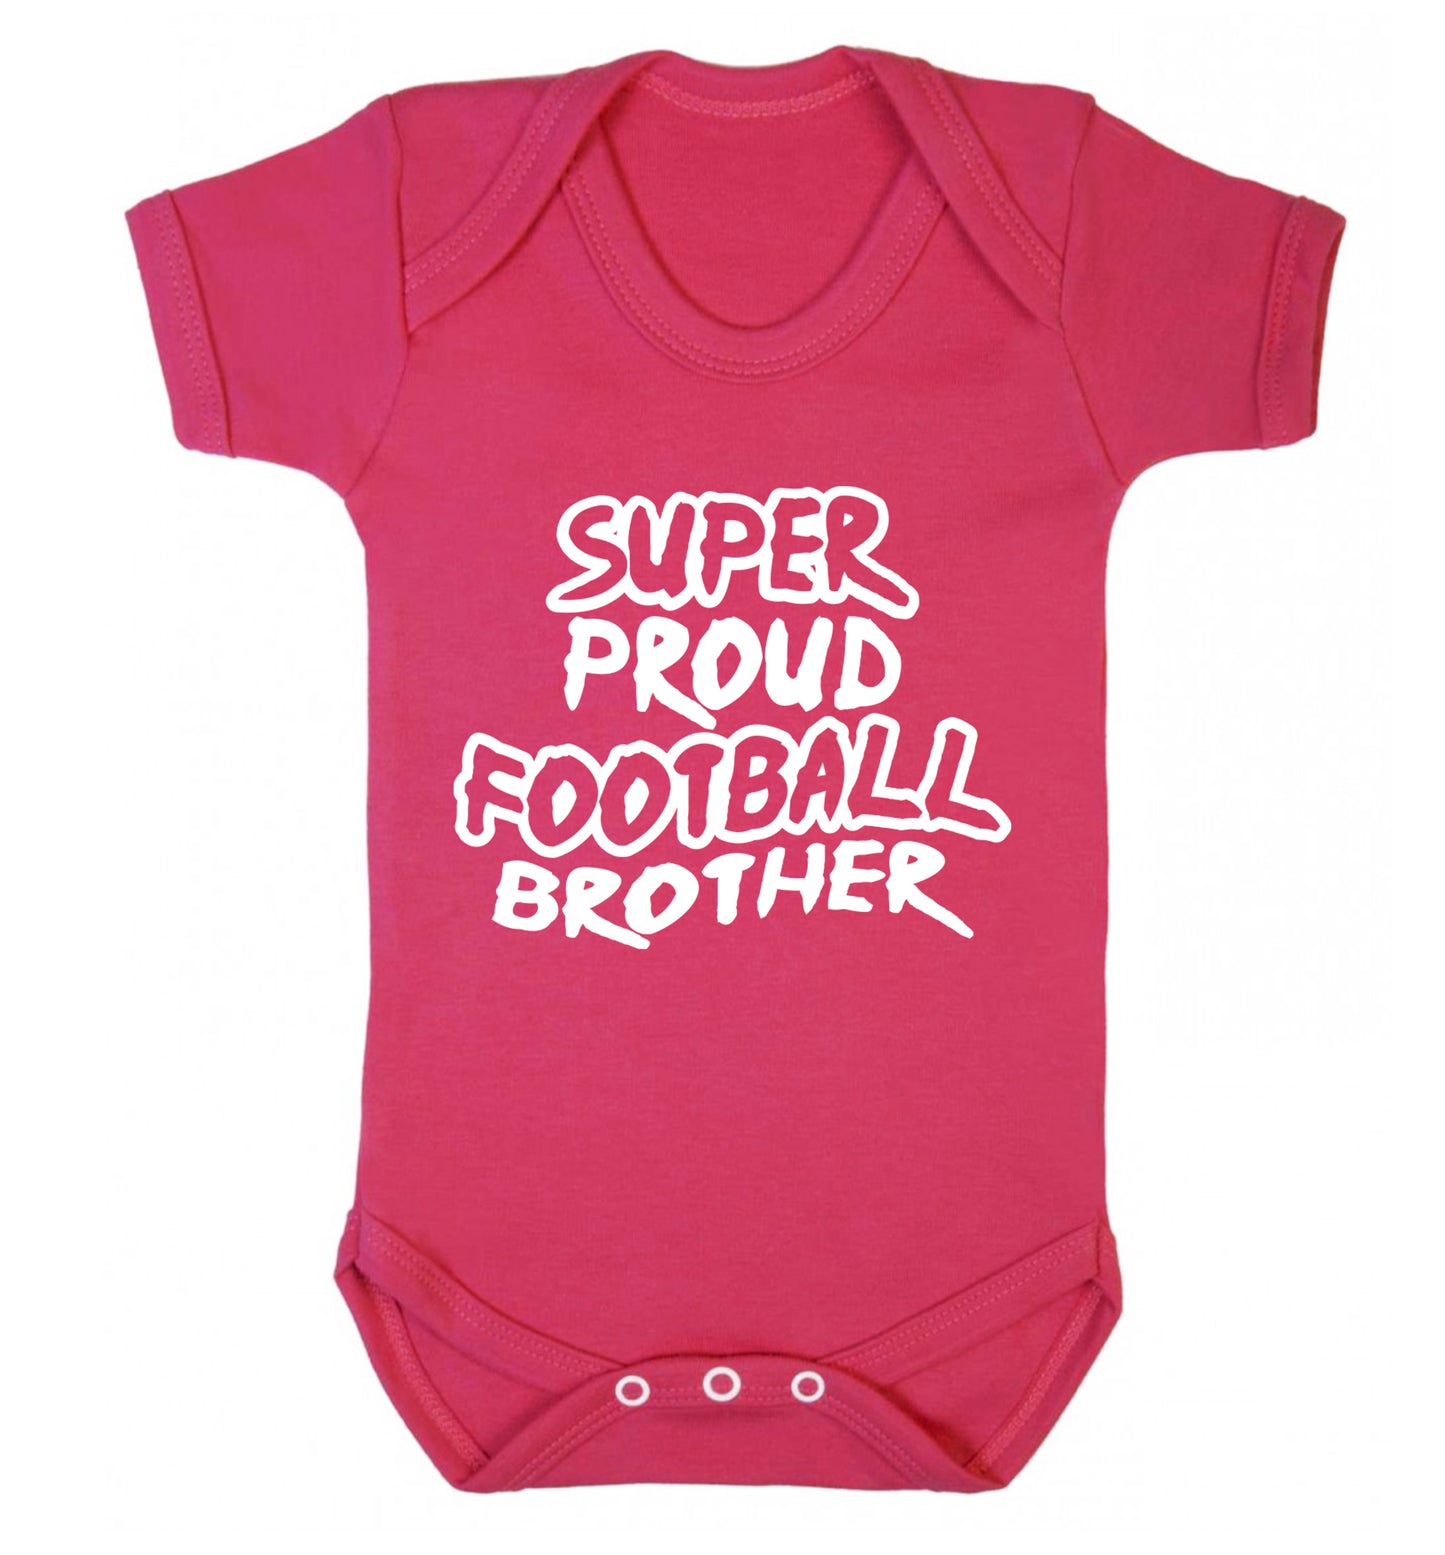 Super proud football brother Baby Vest dark pink 18-24 months